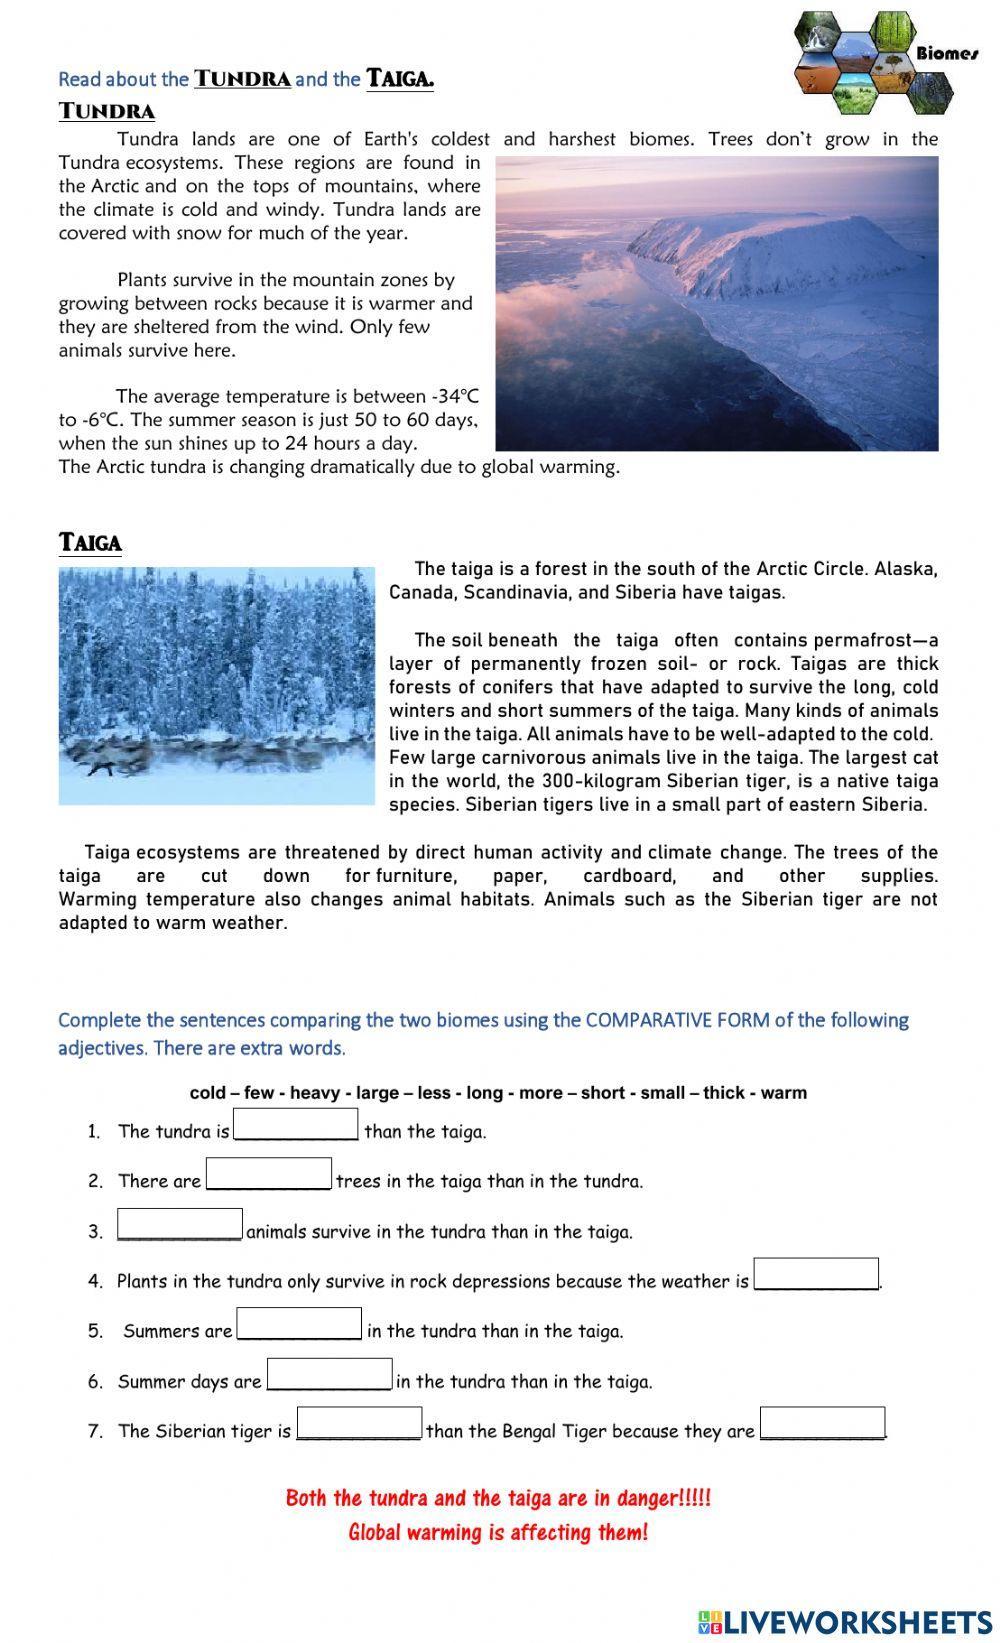 The tundra and the taiga